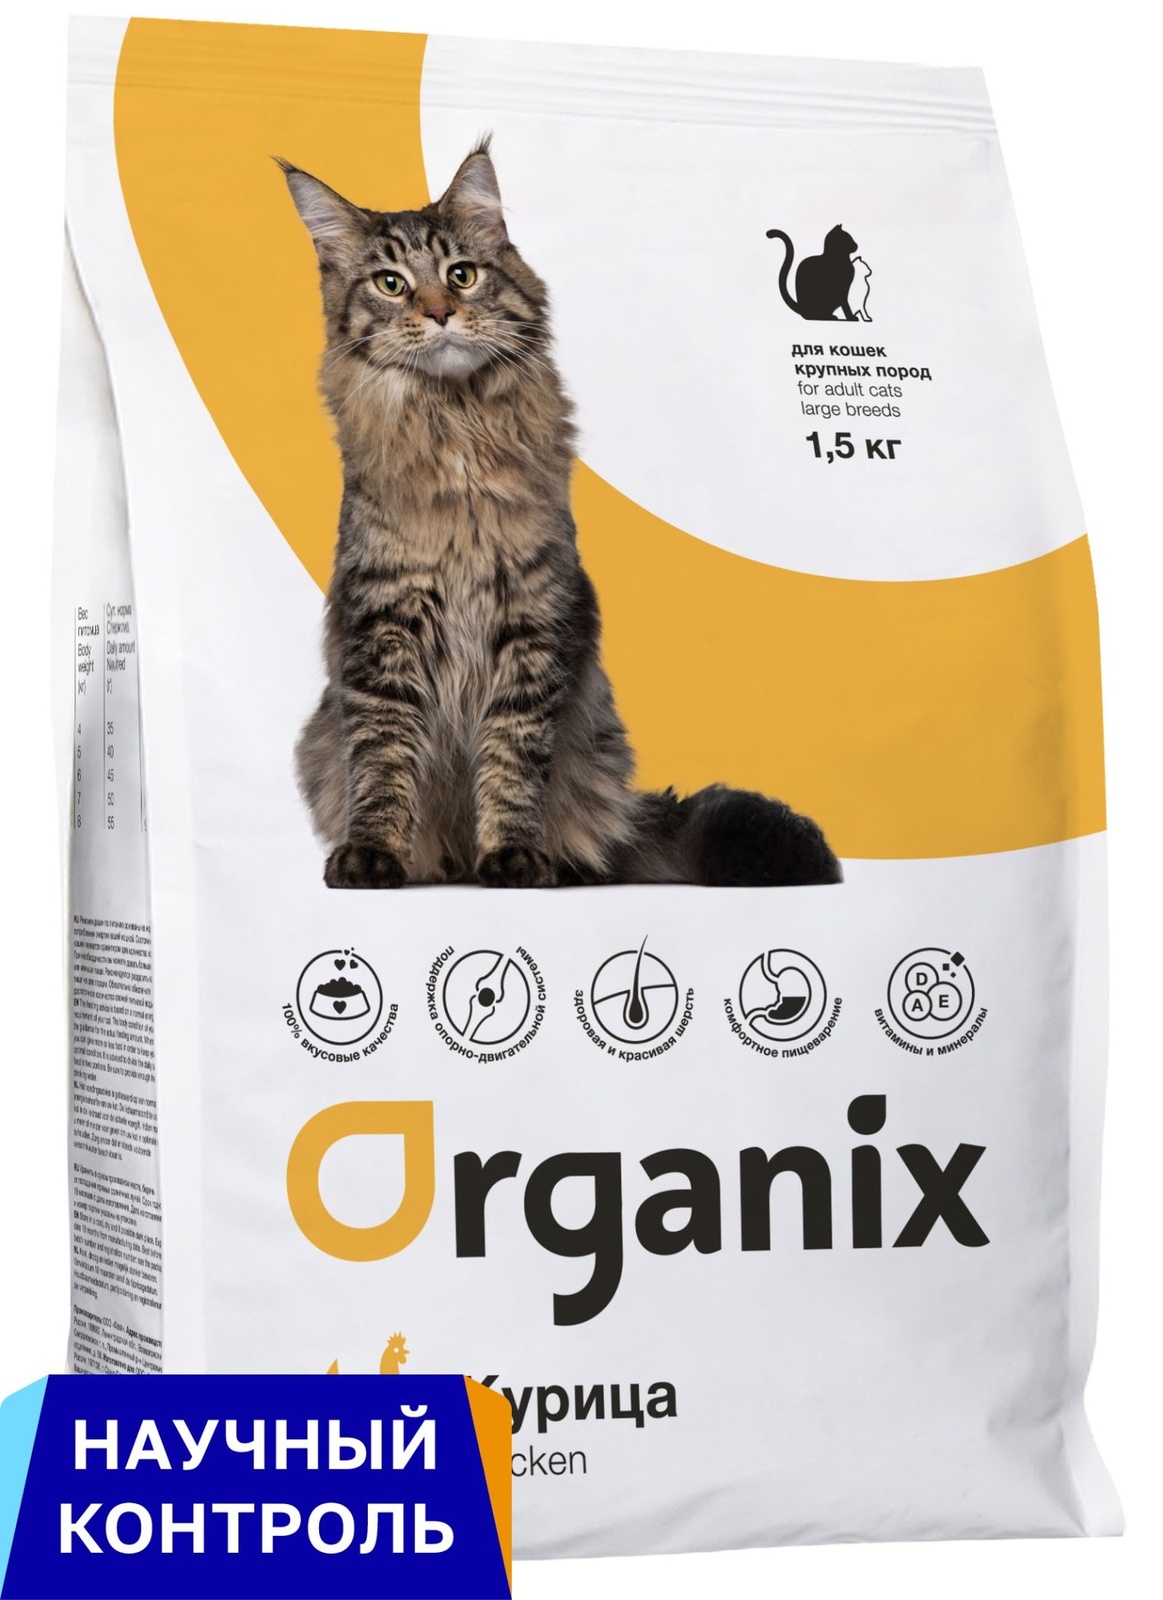 Organix  сухой корм для кошек крупных пород (1,5 кг) Organix  сухой корм для кошек крупных пород (1,5 кг) - фото 1